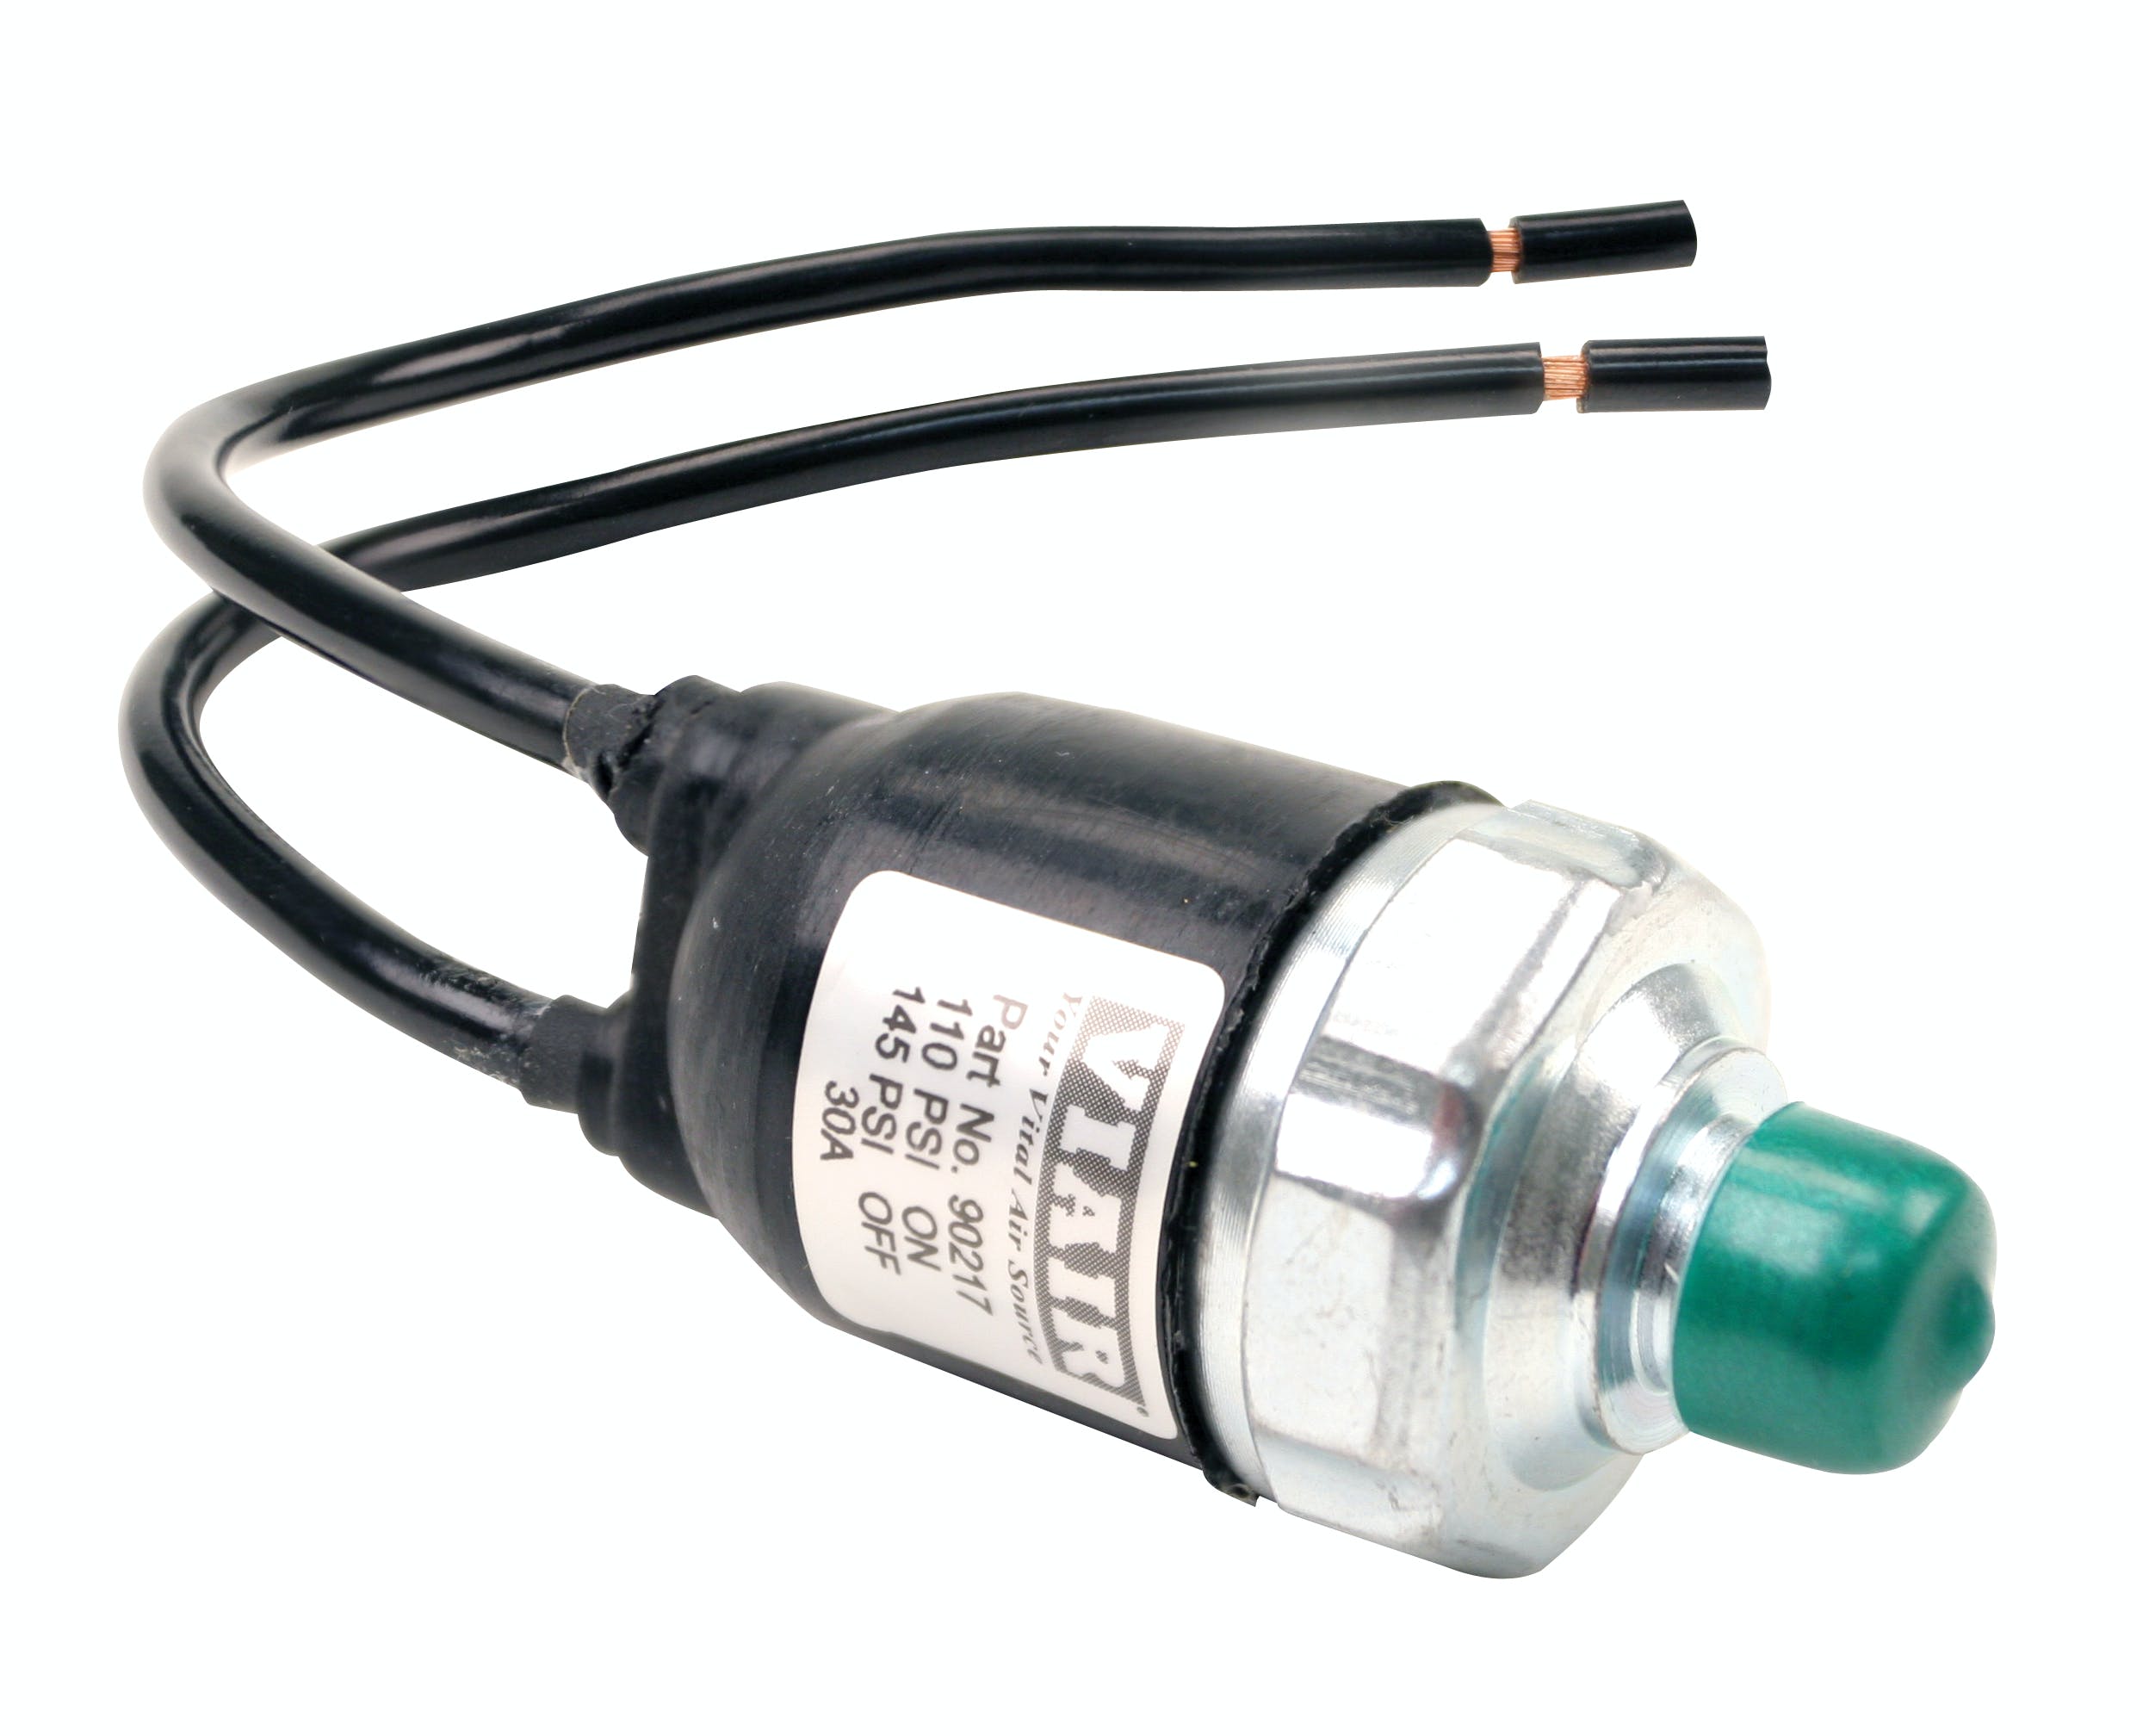 VIAIR 90219 Sealed Pressure Switch  1/8in M NPT Port  12 GA Lead Wires  140 psi On  175